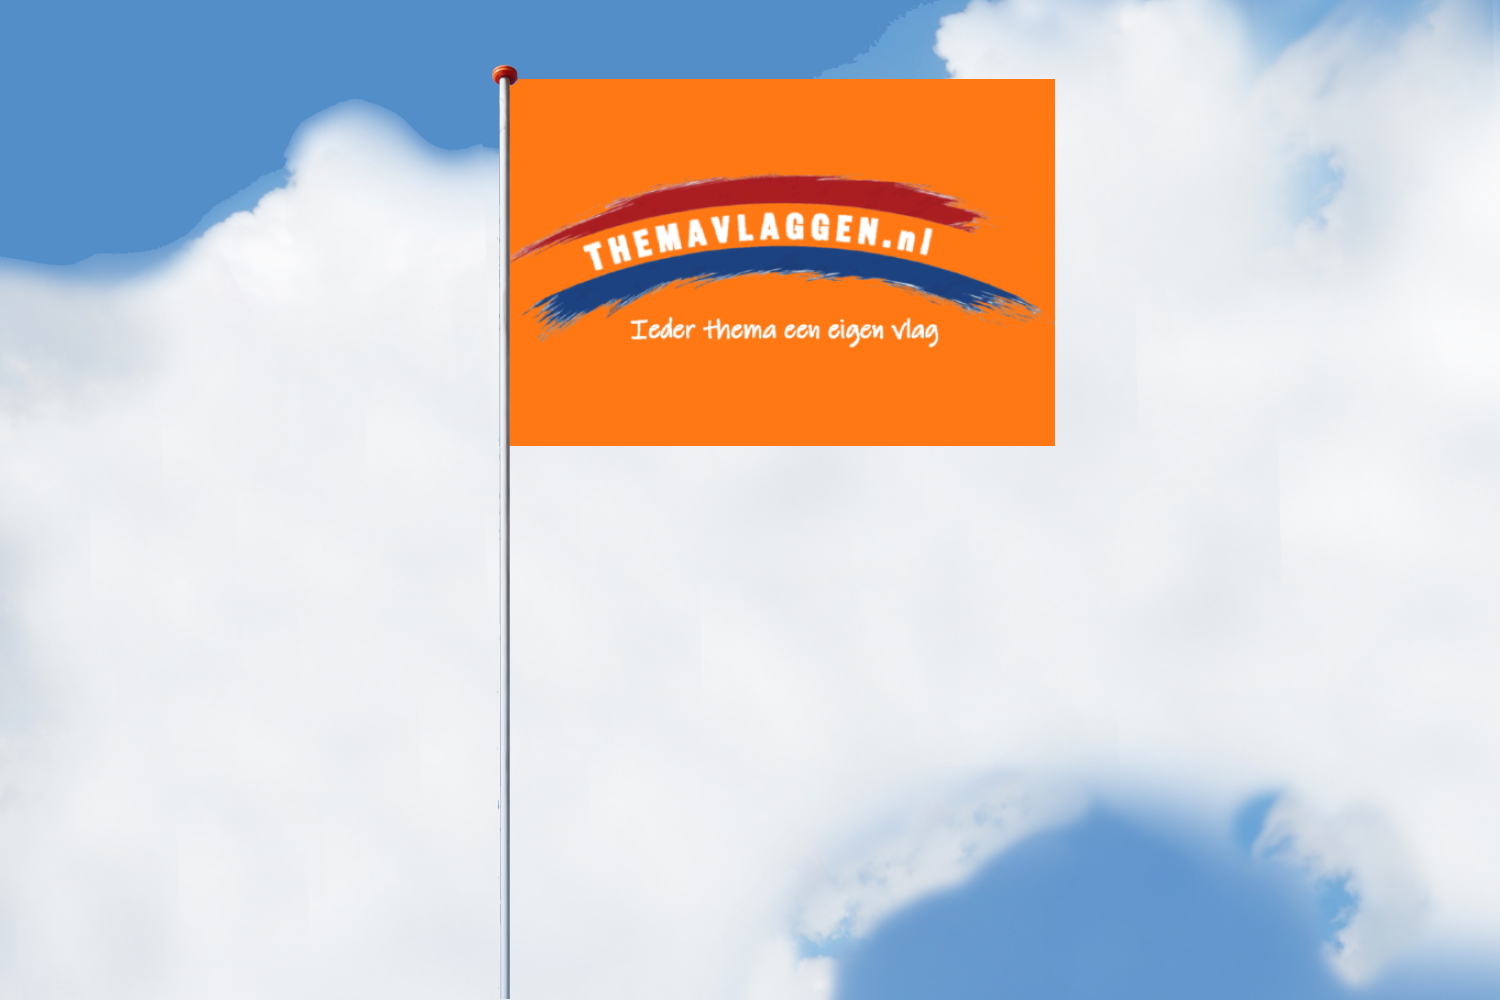 Themavlaggen mastvlag horizontaal